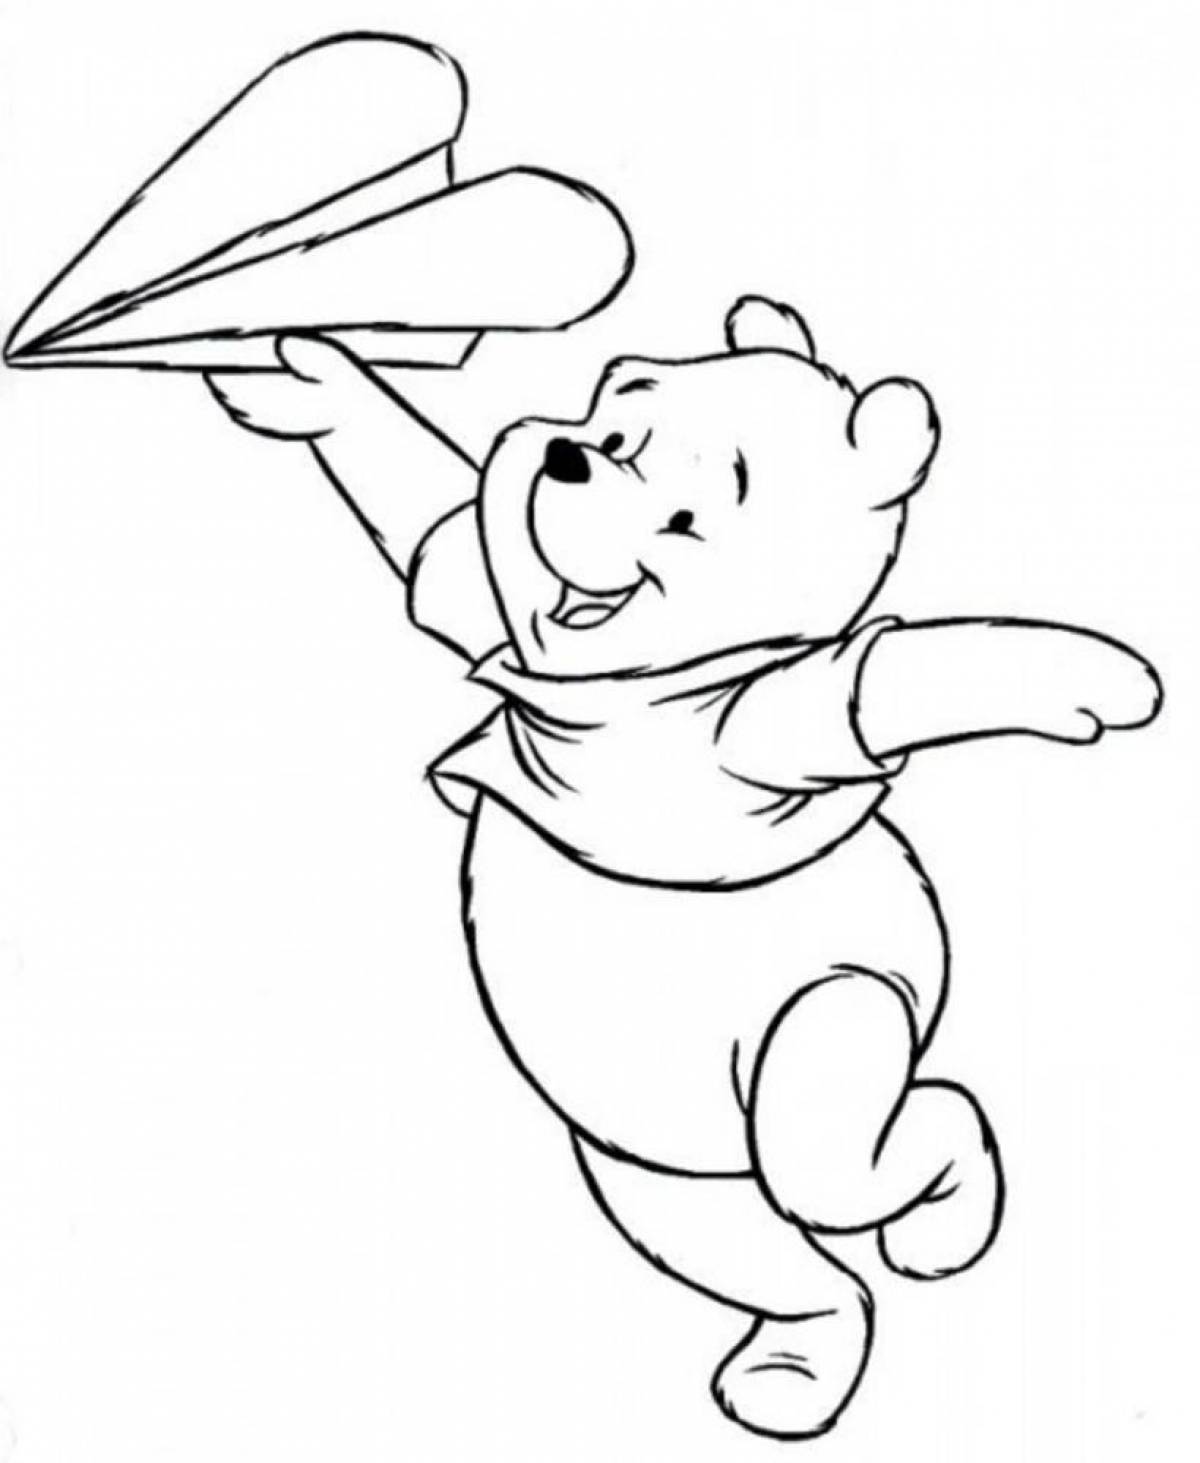 Winnie the pooh #3